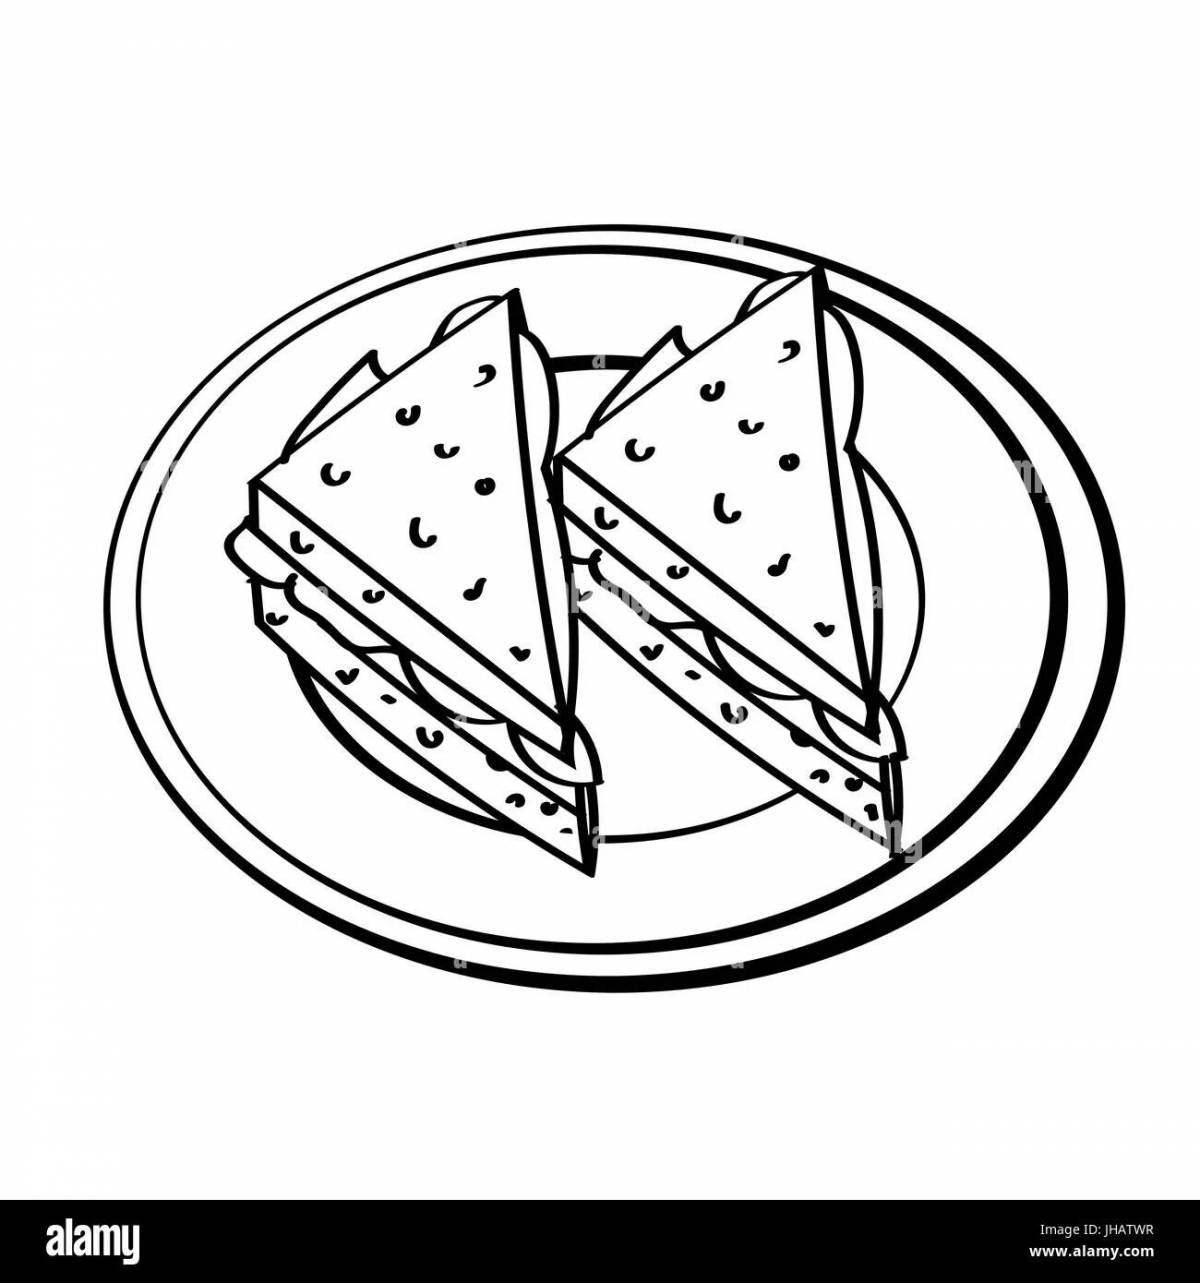 Бутерброд для детей #11